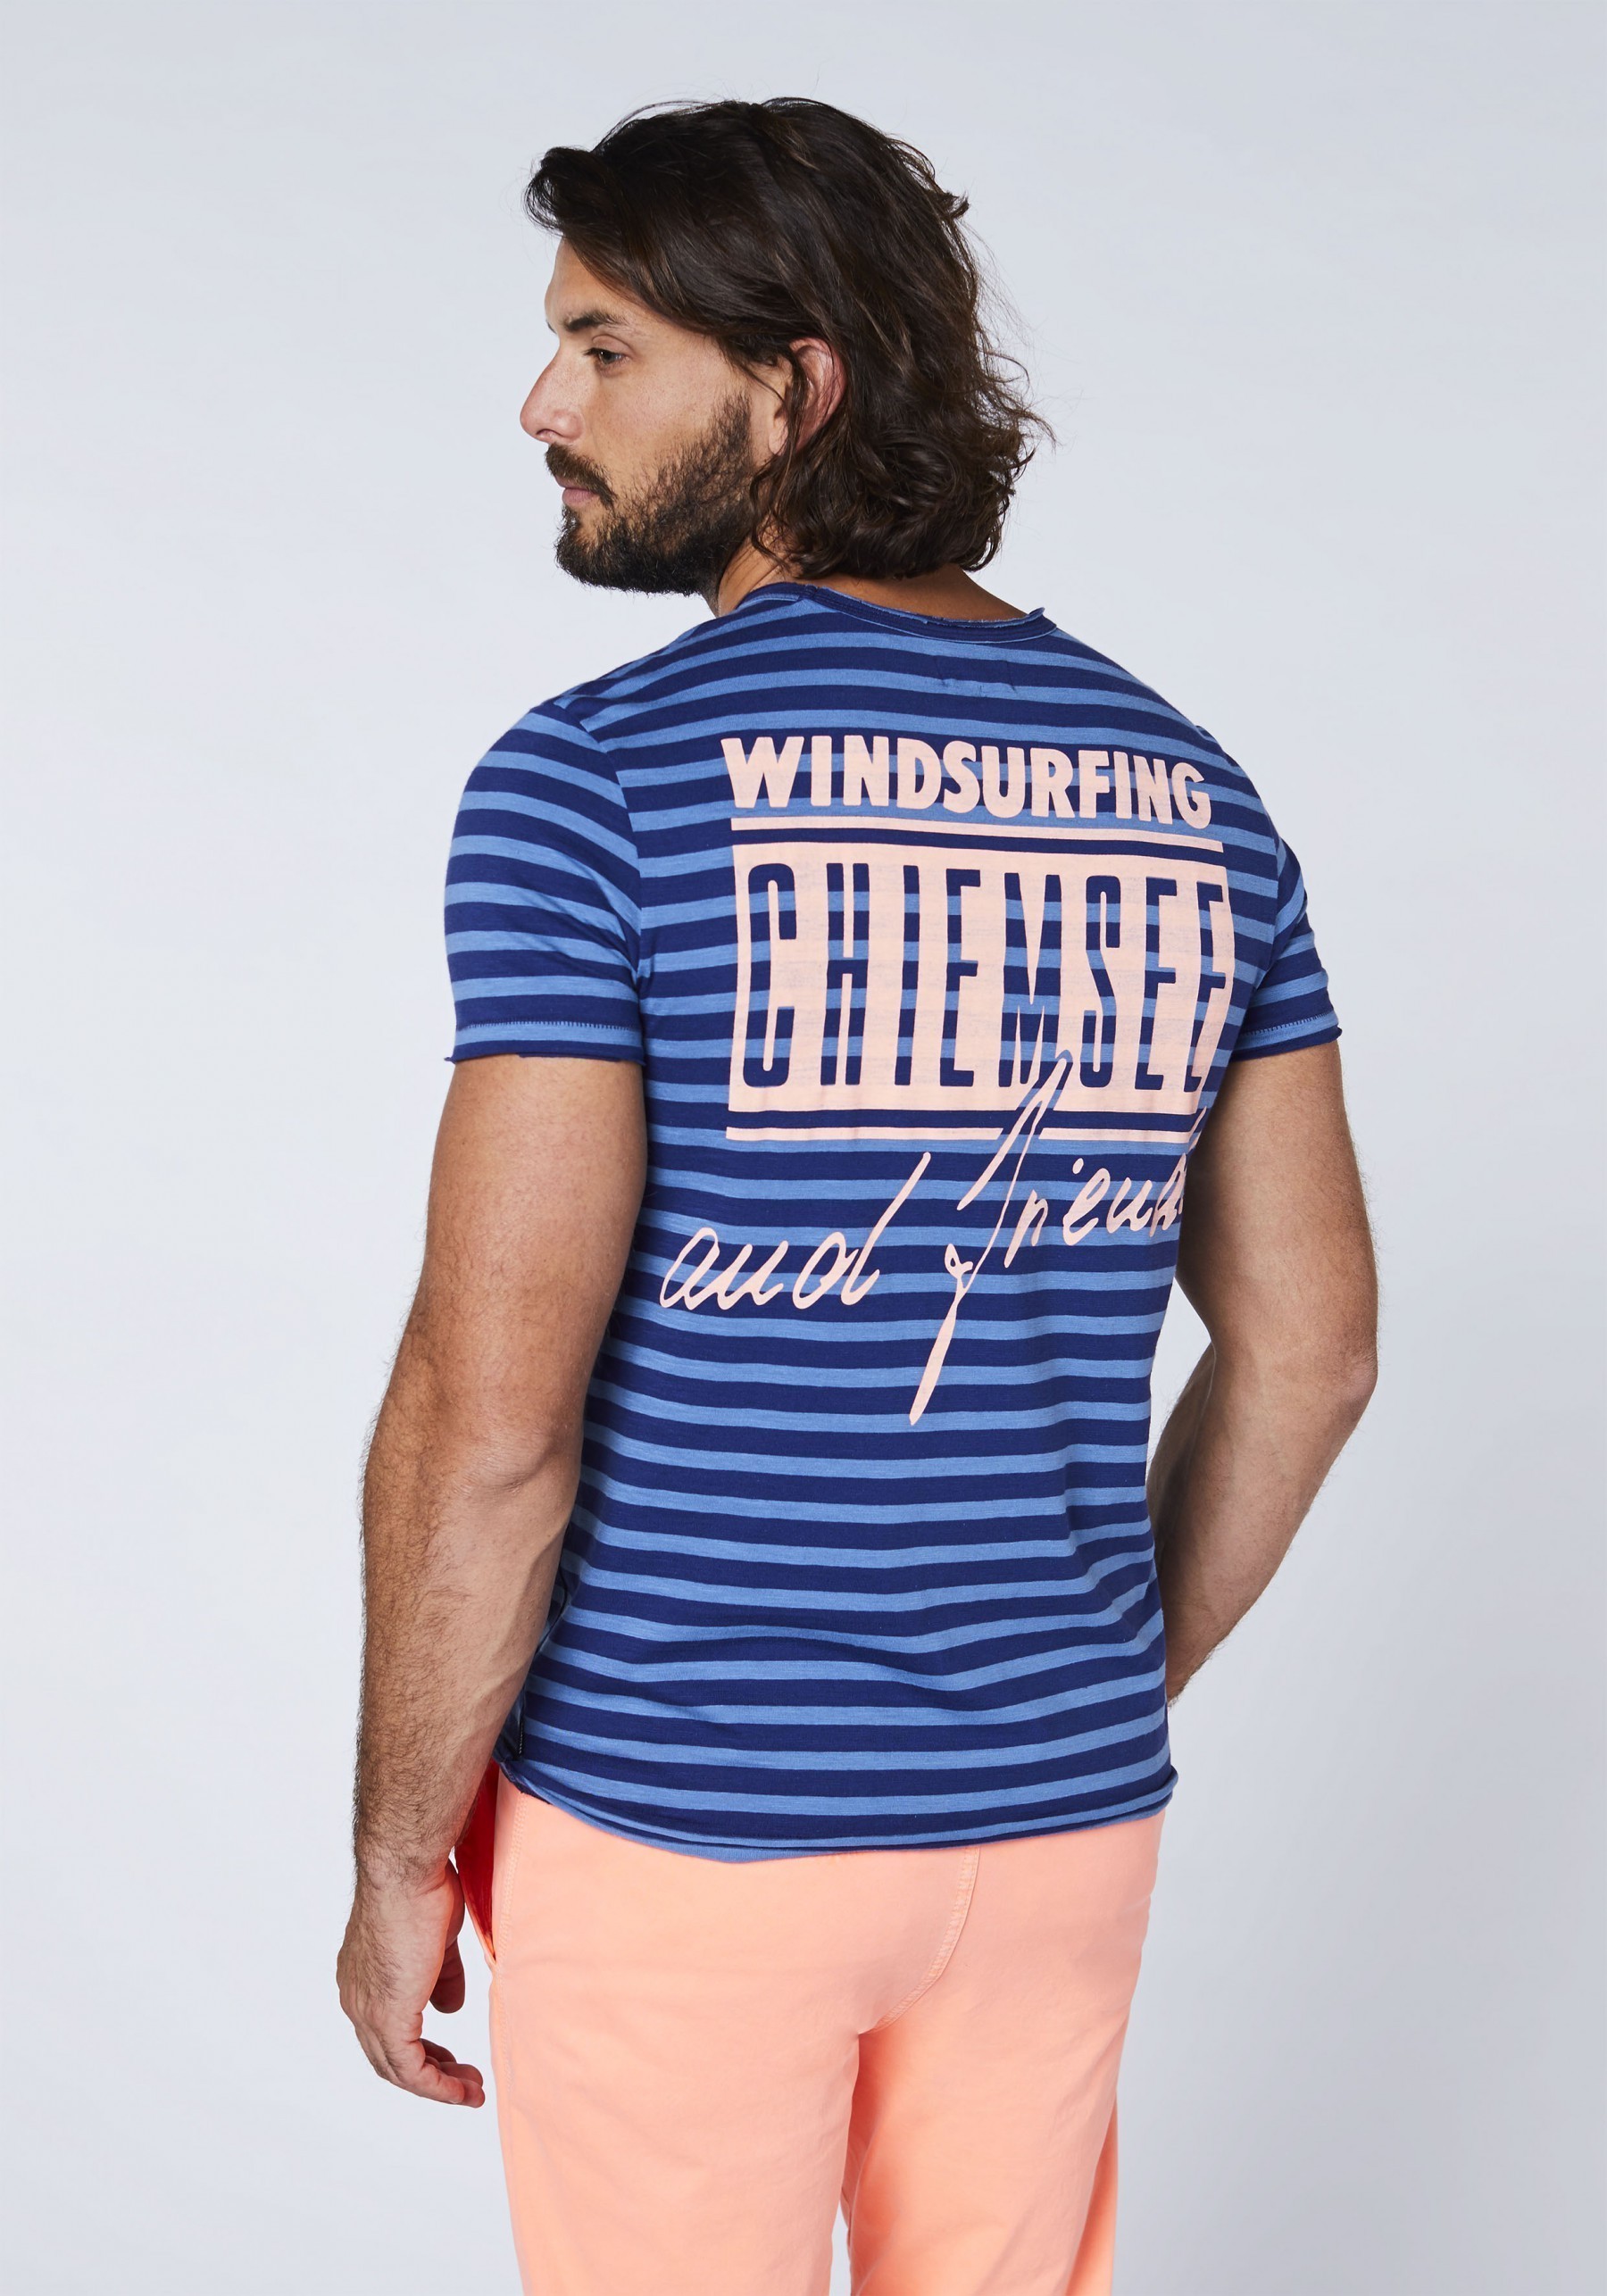 Chiemsee One Eye Herren T-Shirt | Surfshop 24 online - Windsurf, Foil, Wing